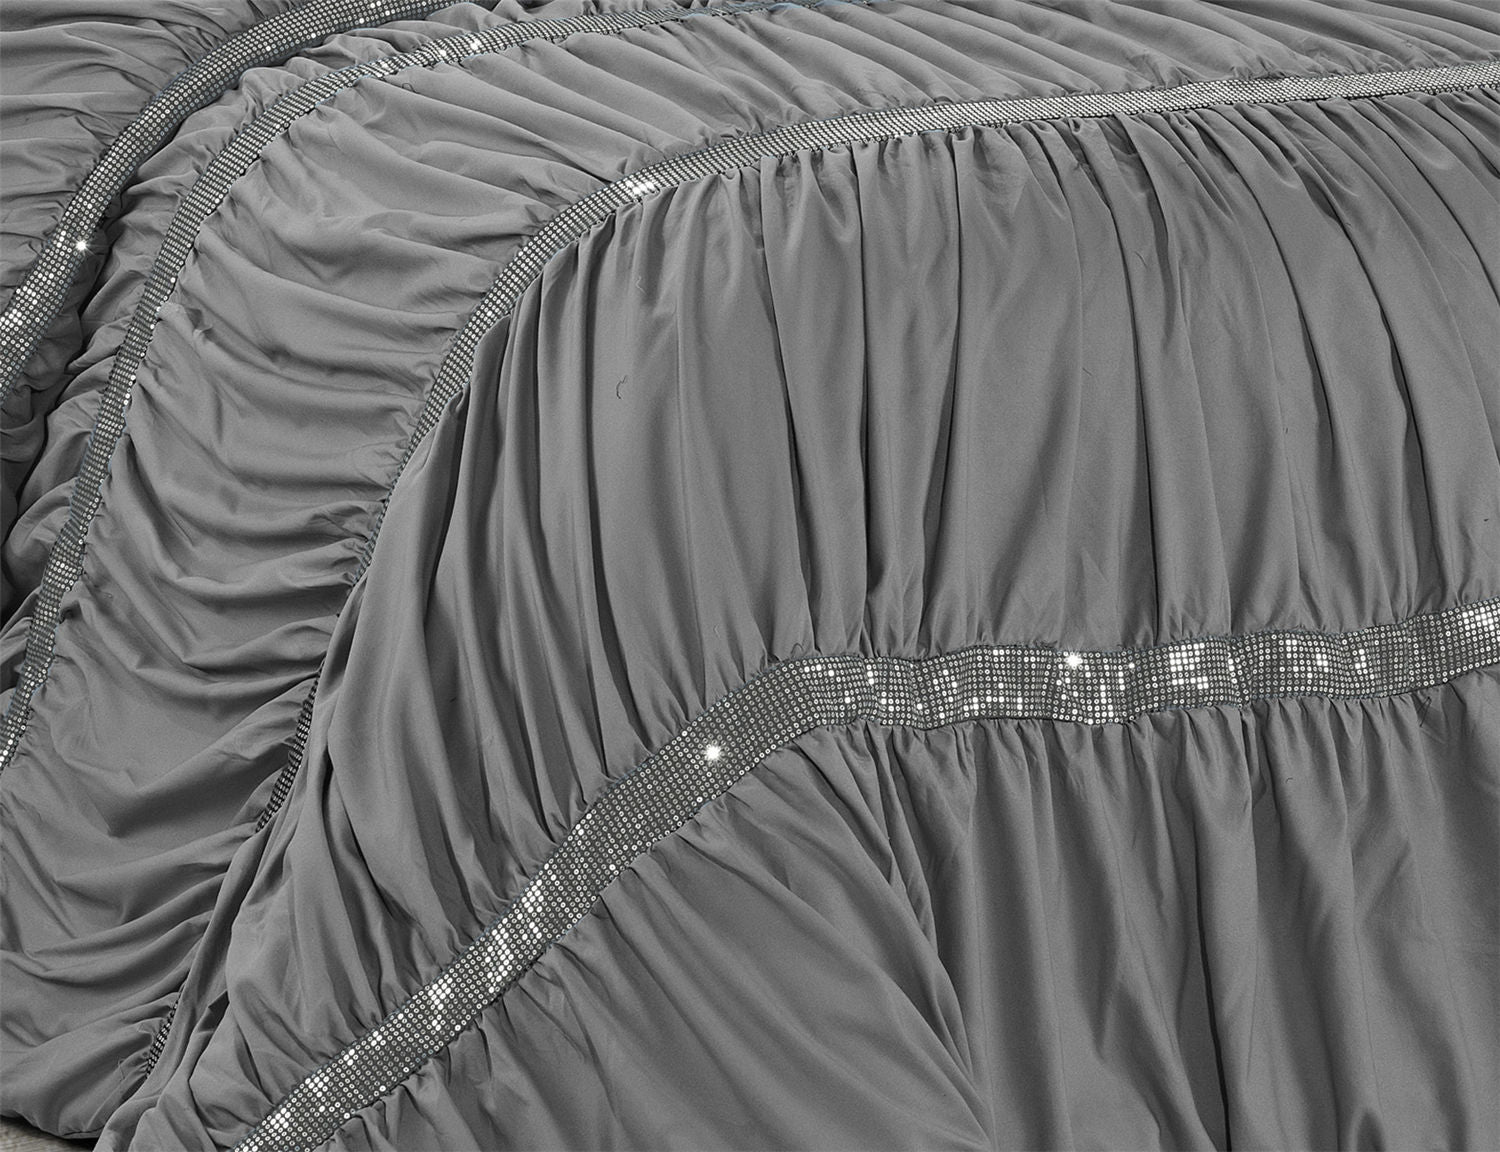 CLARAITA 7PC GRAY BEDDING COMFORTER SET. RUFFLE & PATCHWORK, MICROFIBER FABRIC, FADE RESISTANT, SUPER SOFT, BED IN A BAG